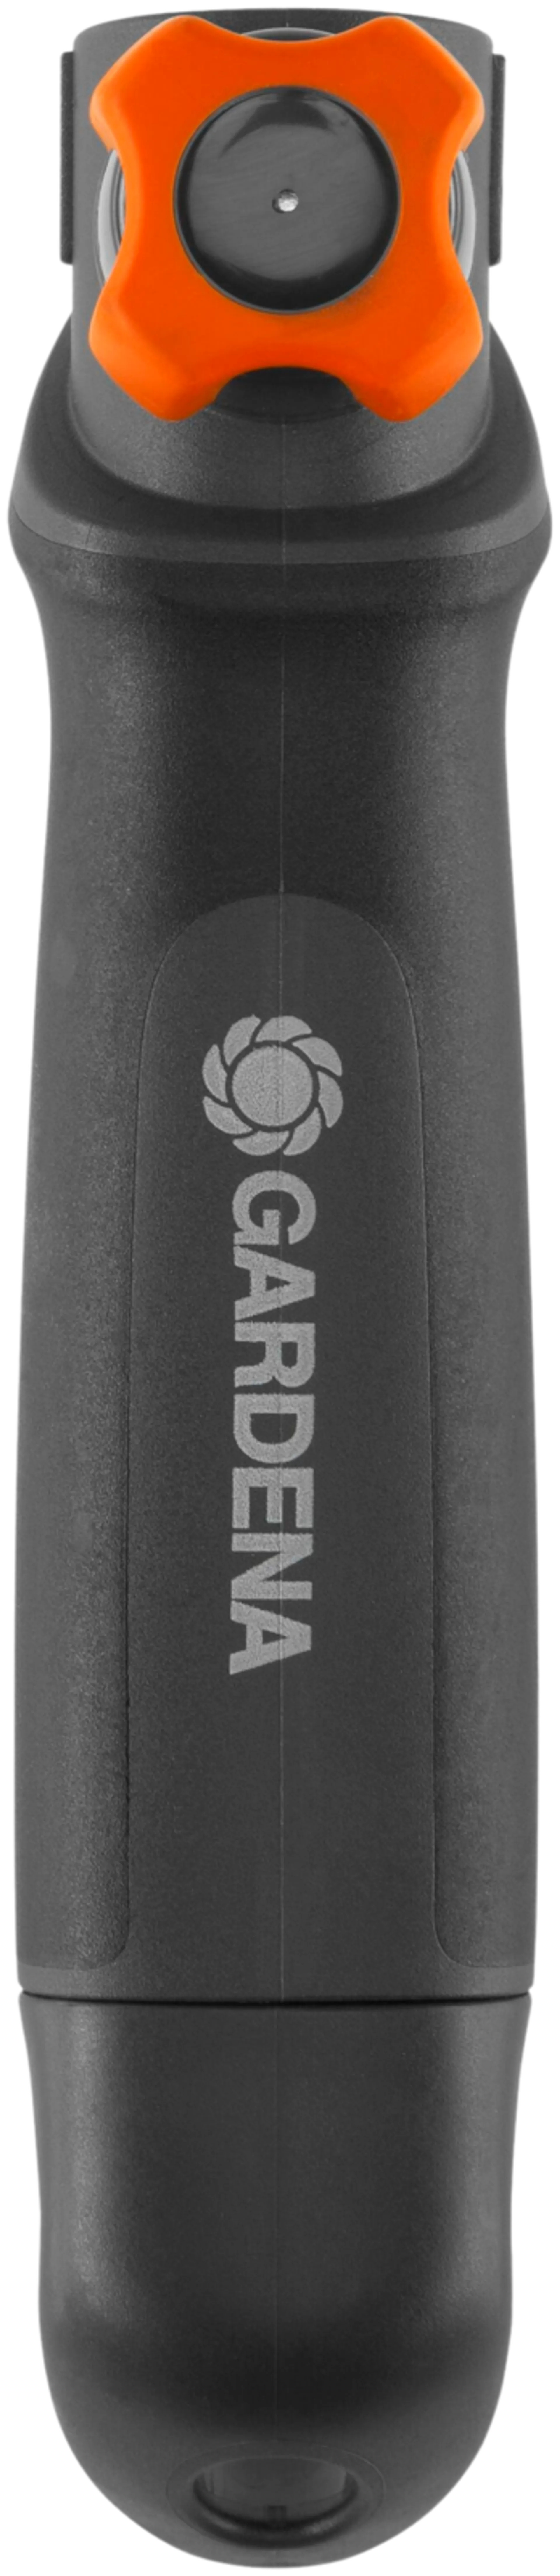 Gardena Combisystem kahva pieni - 1